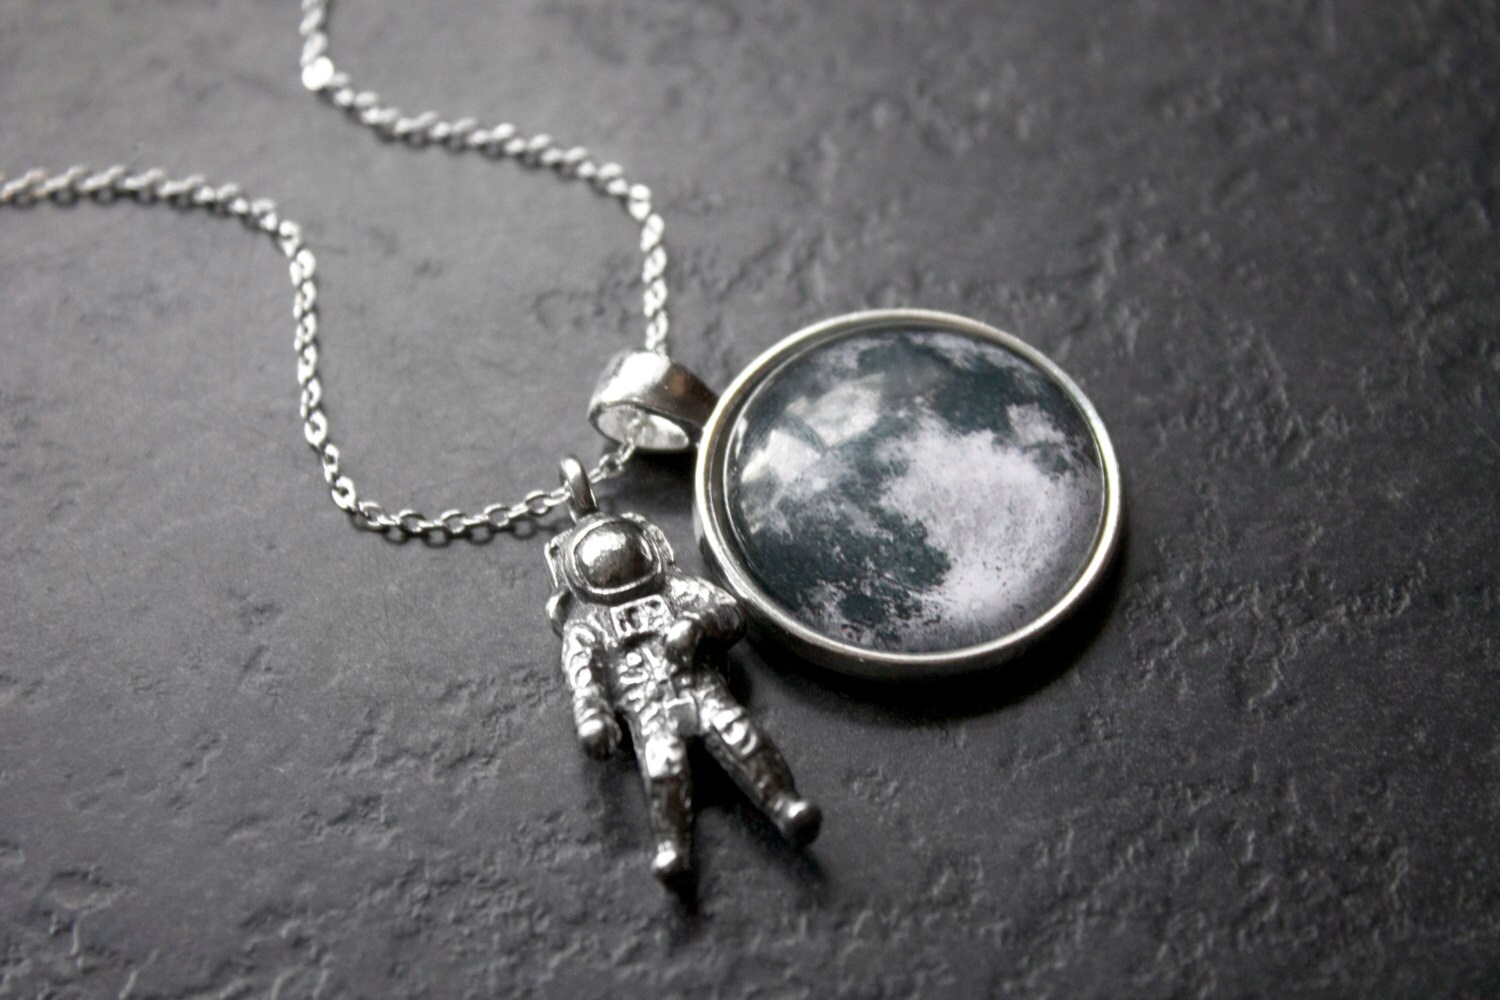 LOUIS VUITTON Collier Astro LV Necklace Astronaut Motif Silver